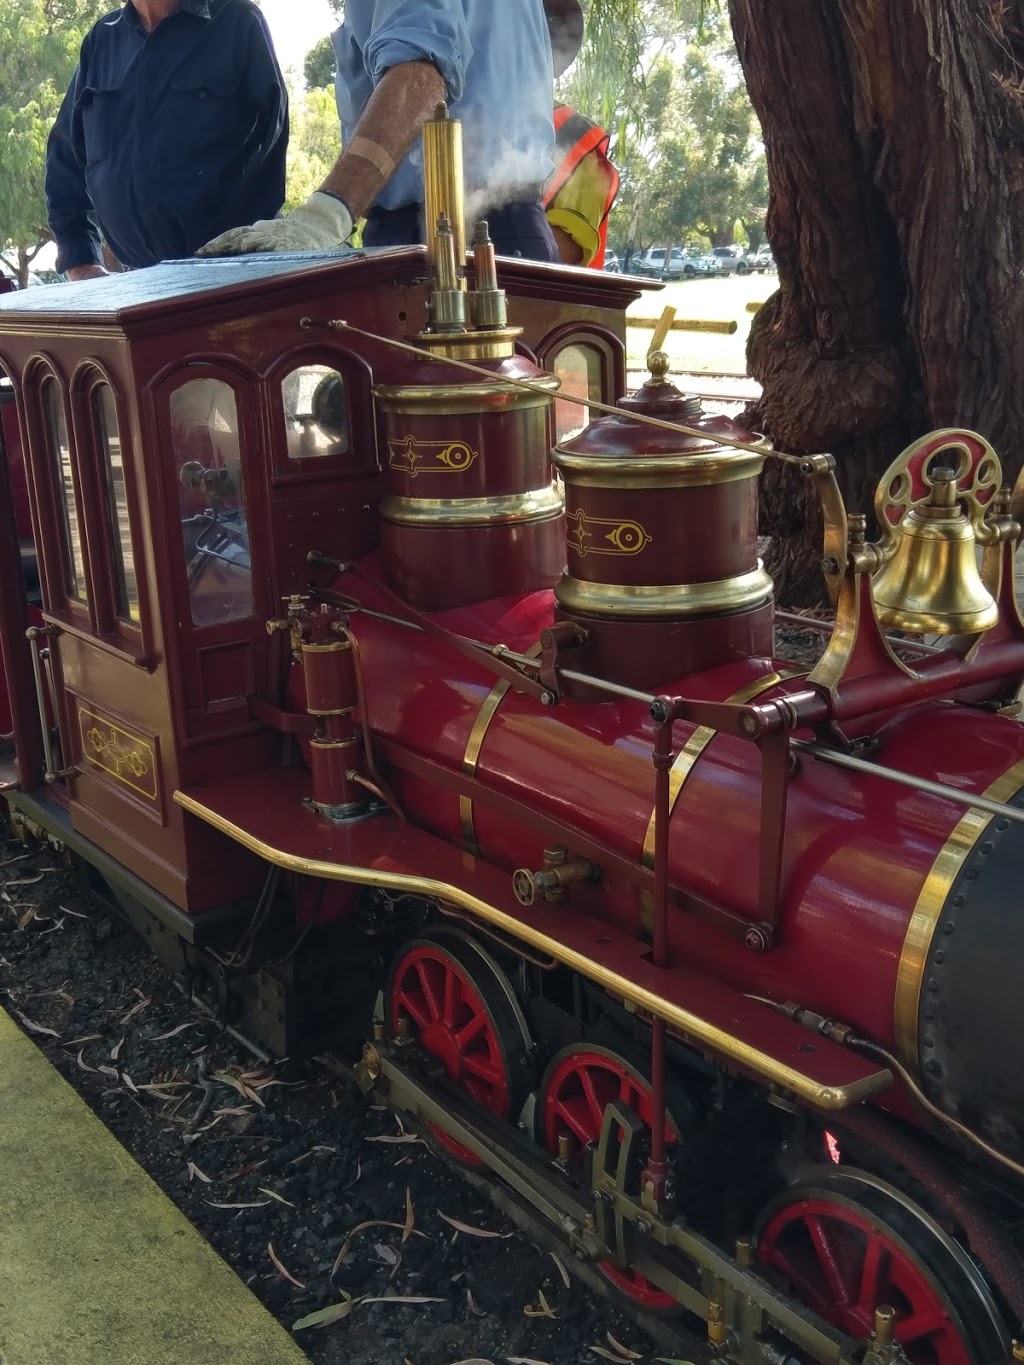 Forrest Park Railway | amusement park | Blair St, Bunbury WA 6230, Australia